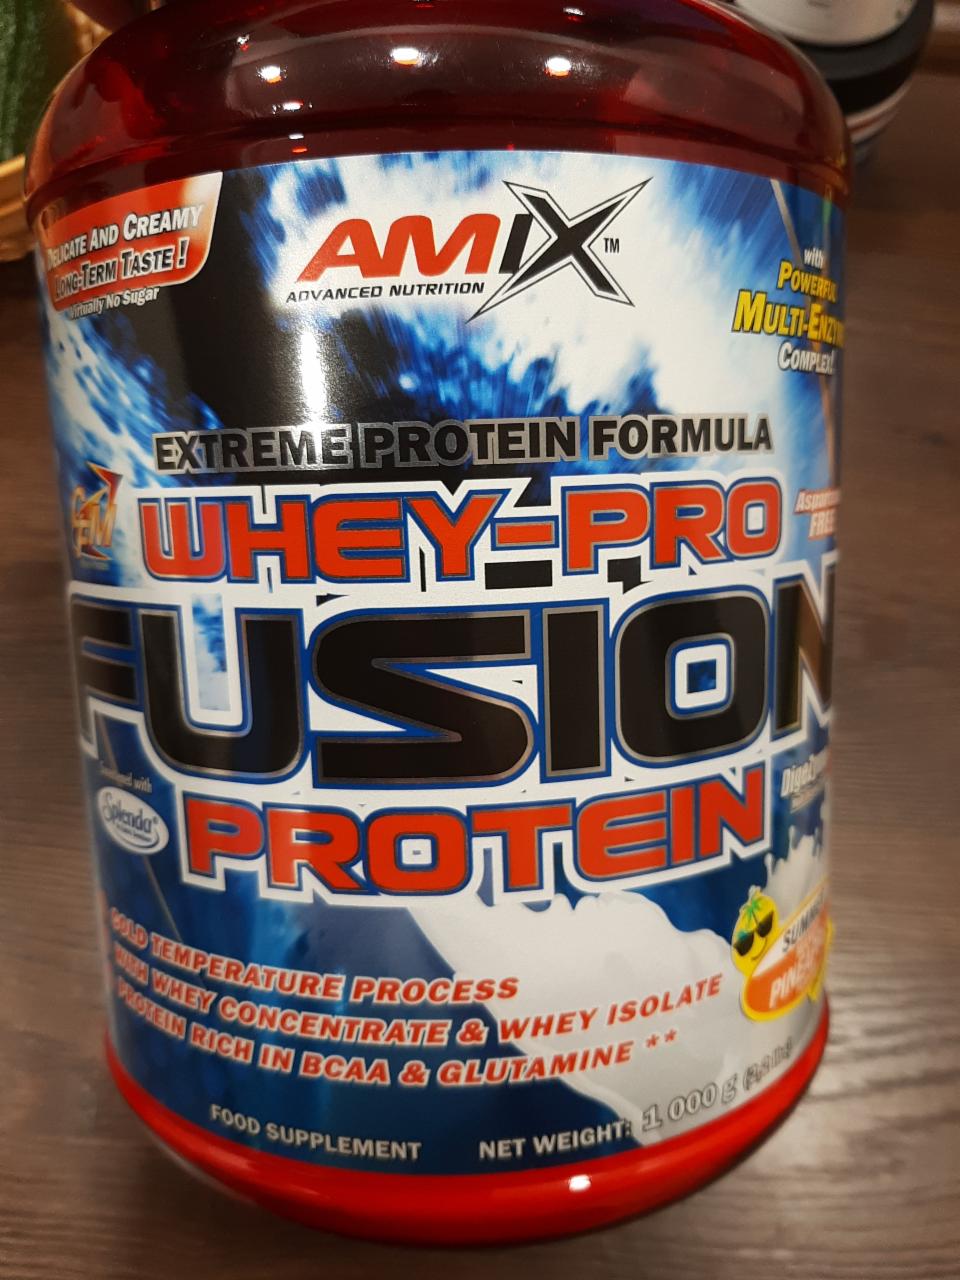 Fotografie - Extreme protein formula Whey-Pro fusion protein Summer Mango Pineapple flavour Amix Nutrition